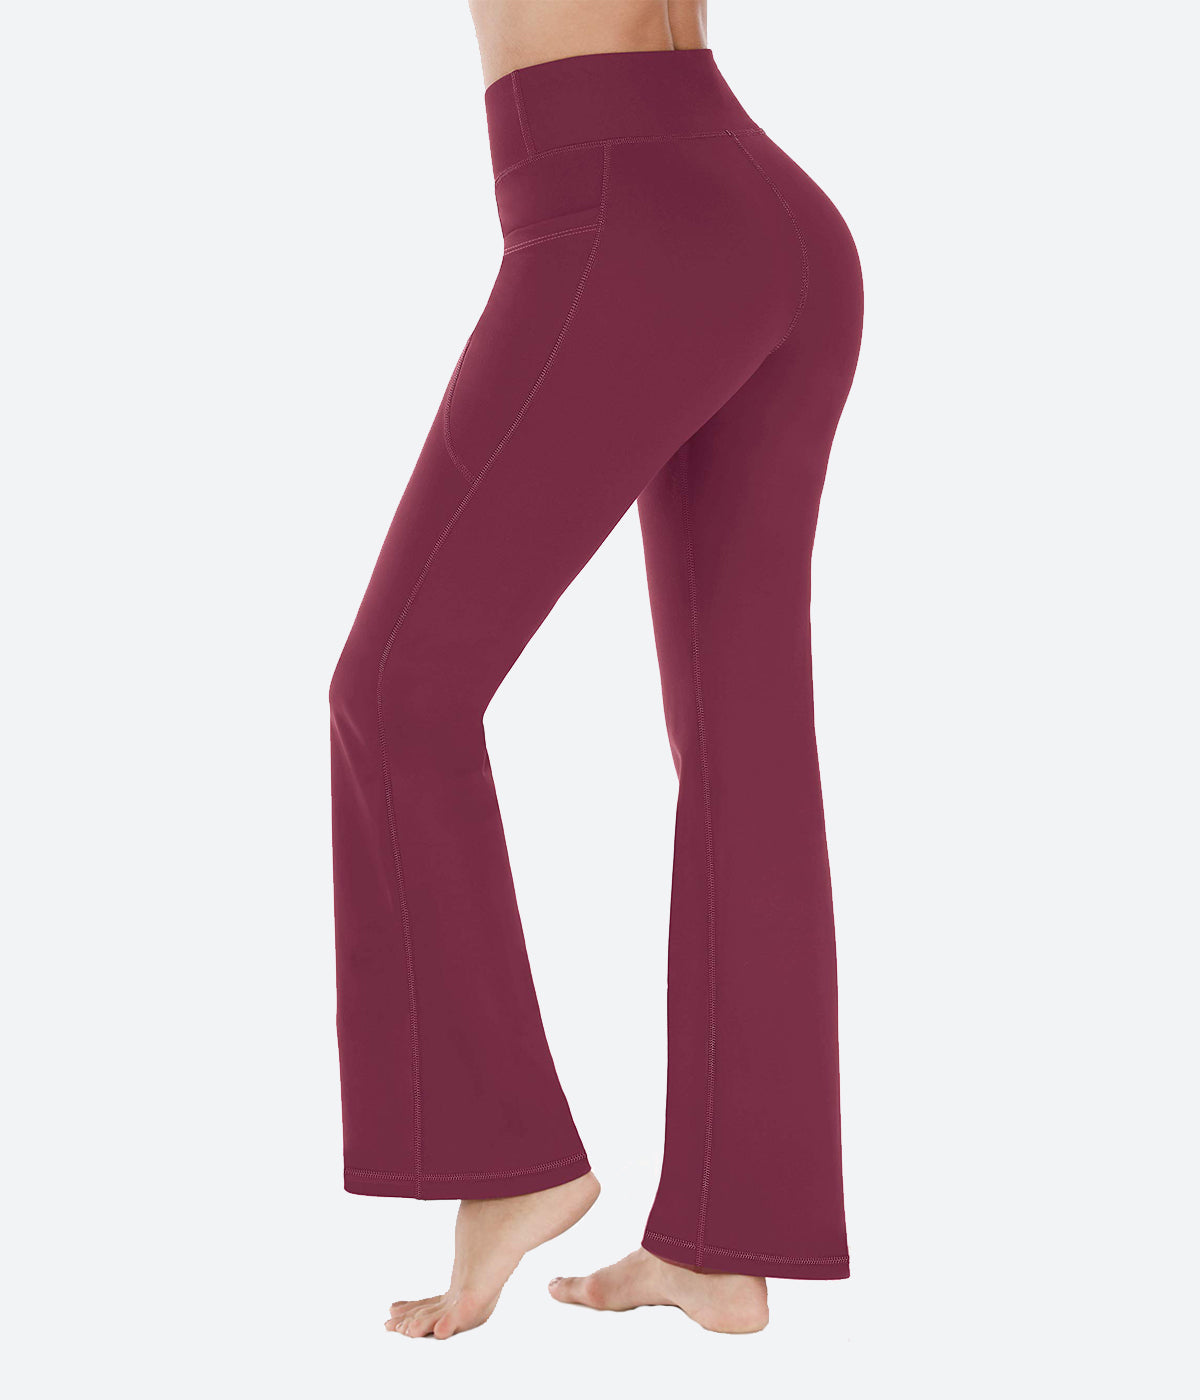  Onlypuff Wine Red Sweatpants Women Wide Leg Yoga